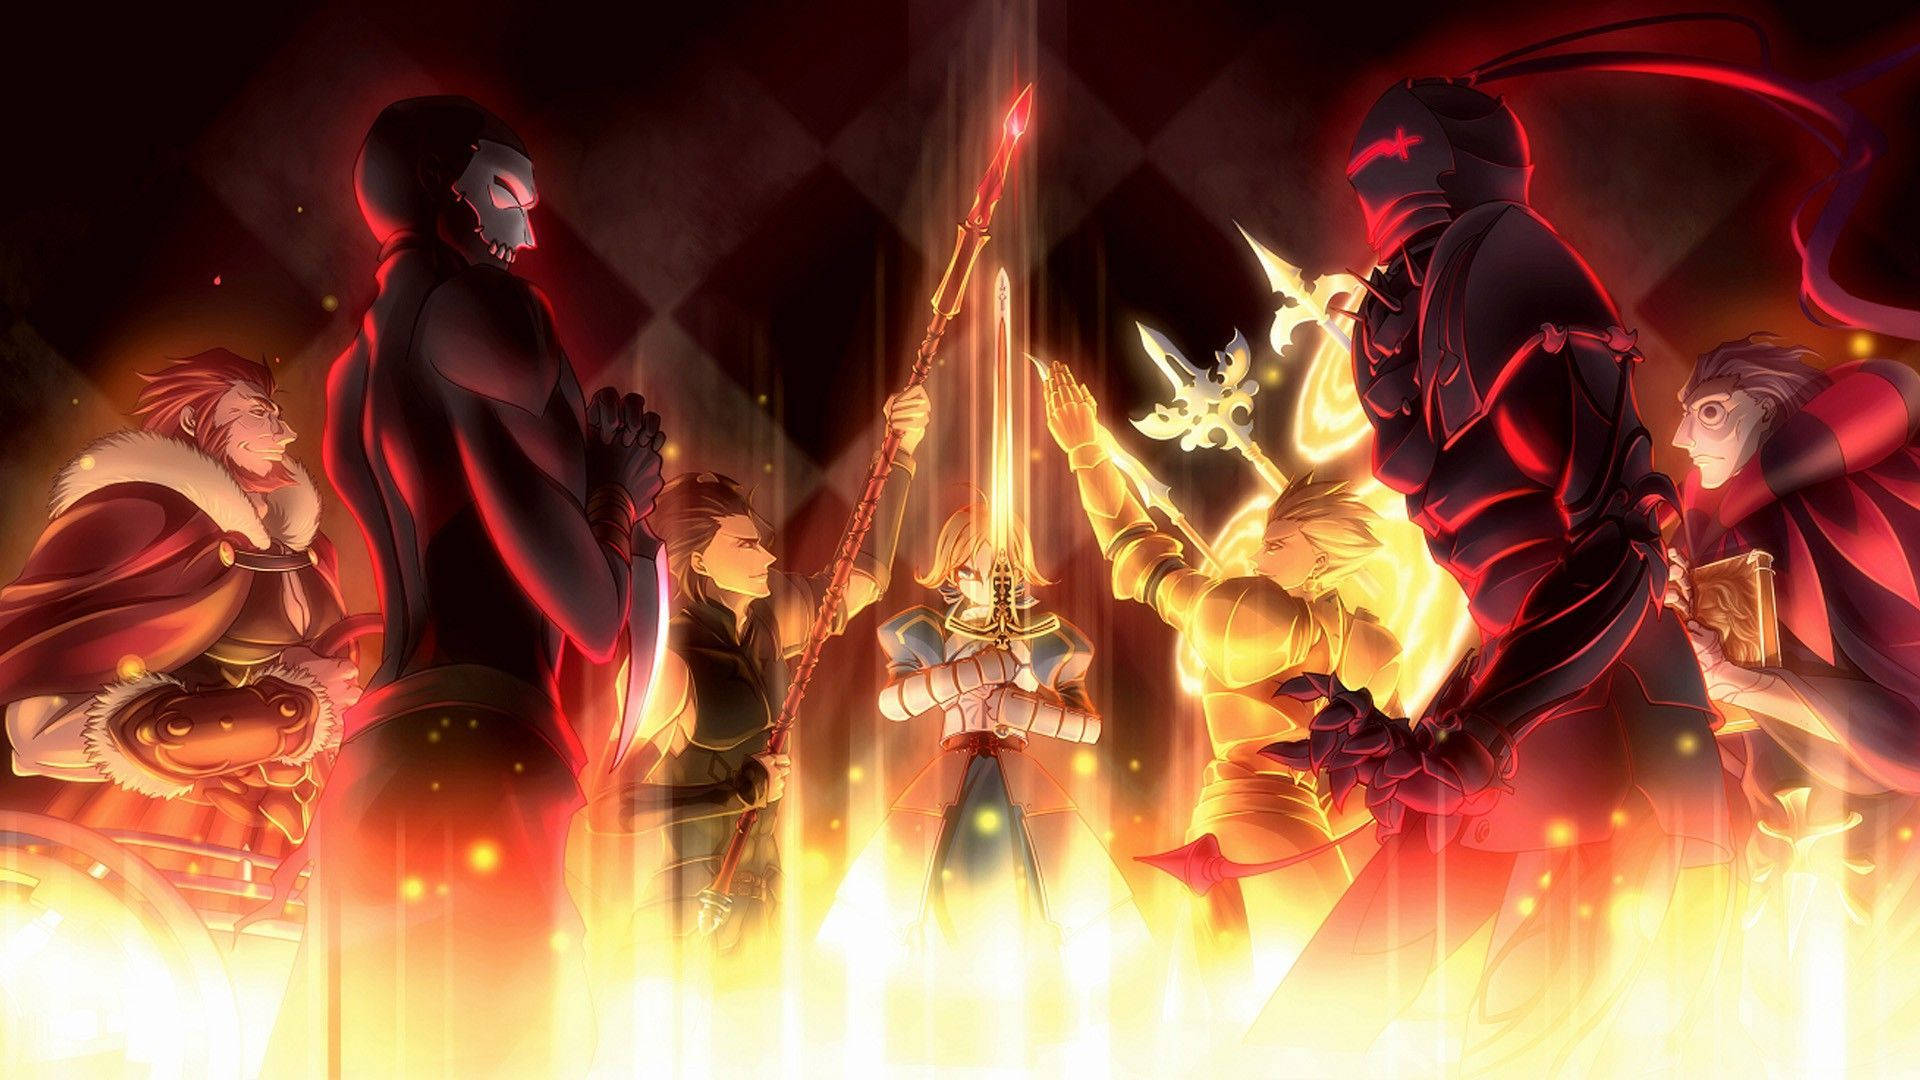 Blazing Poster Of Fate Zero Background